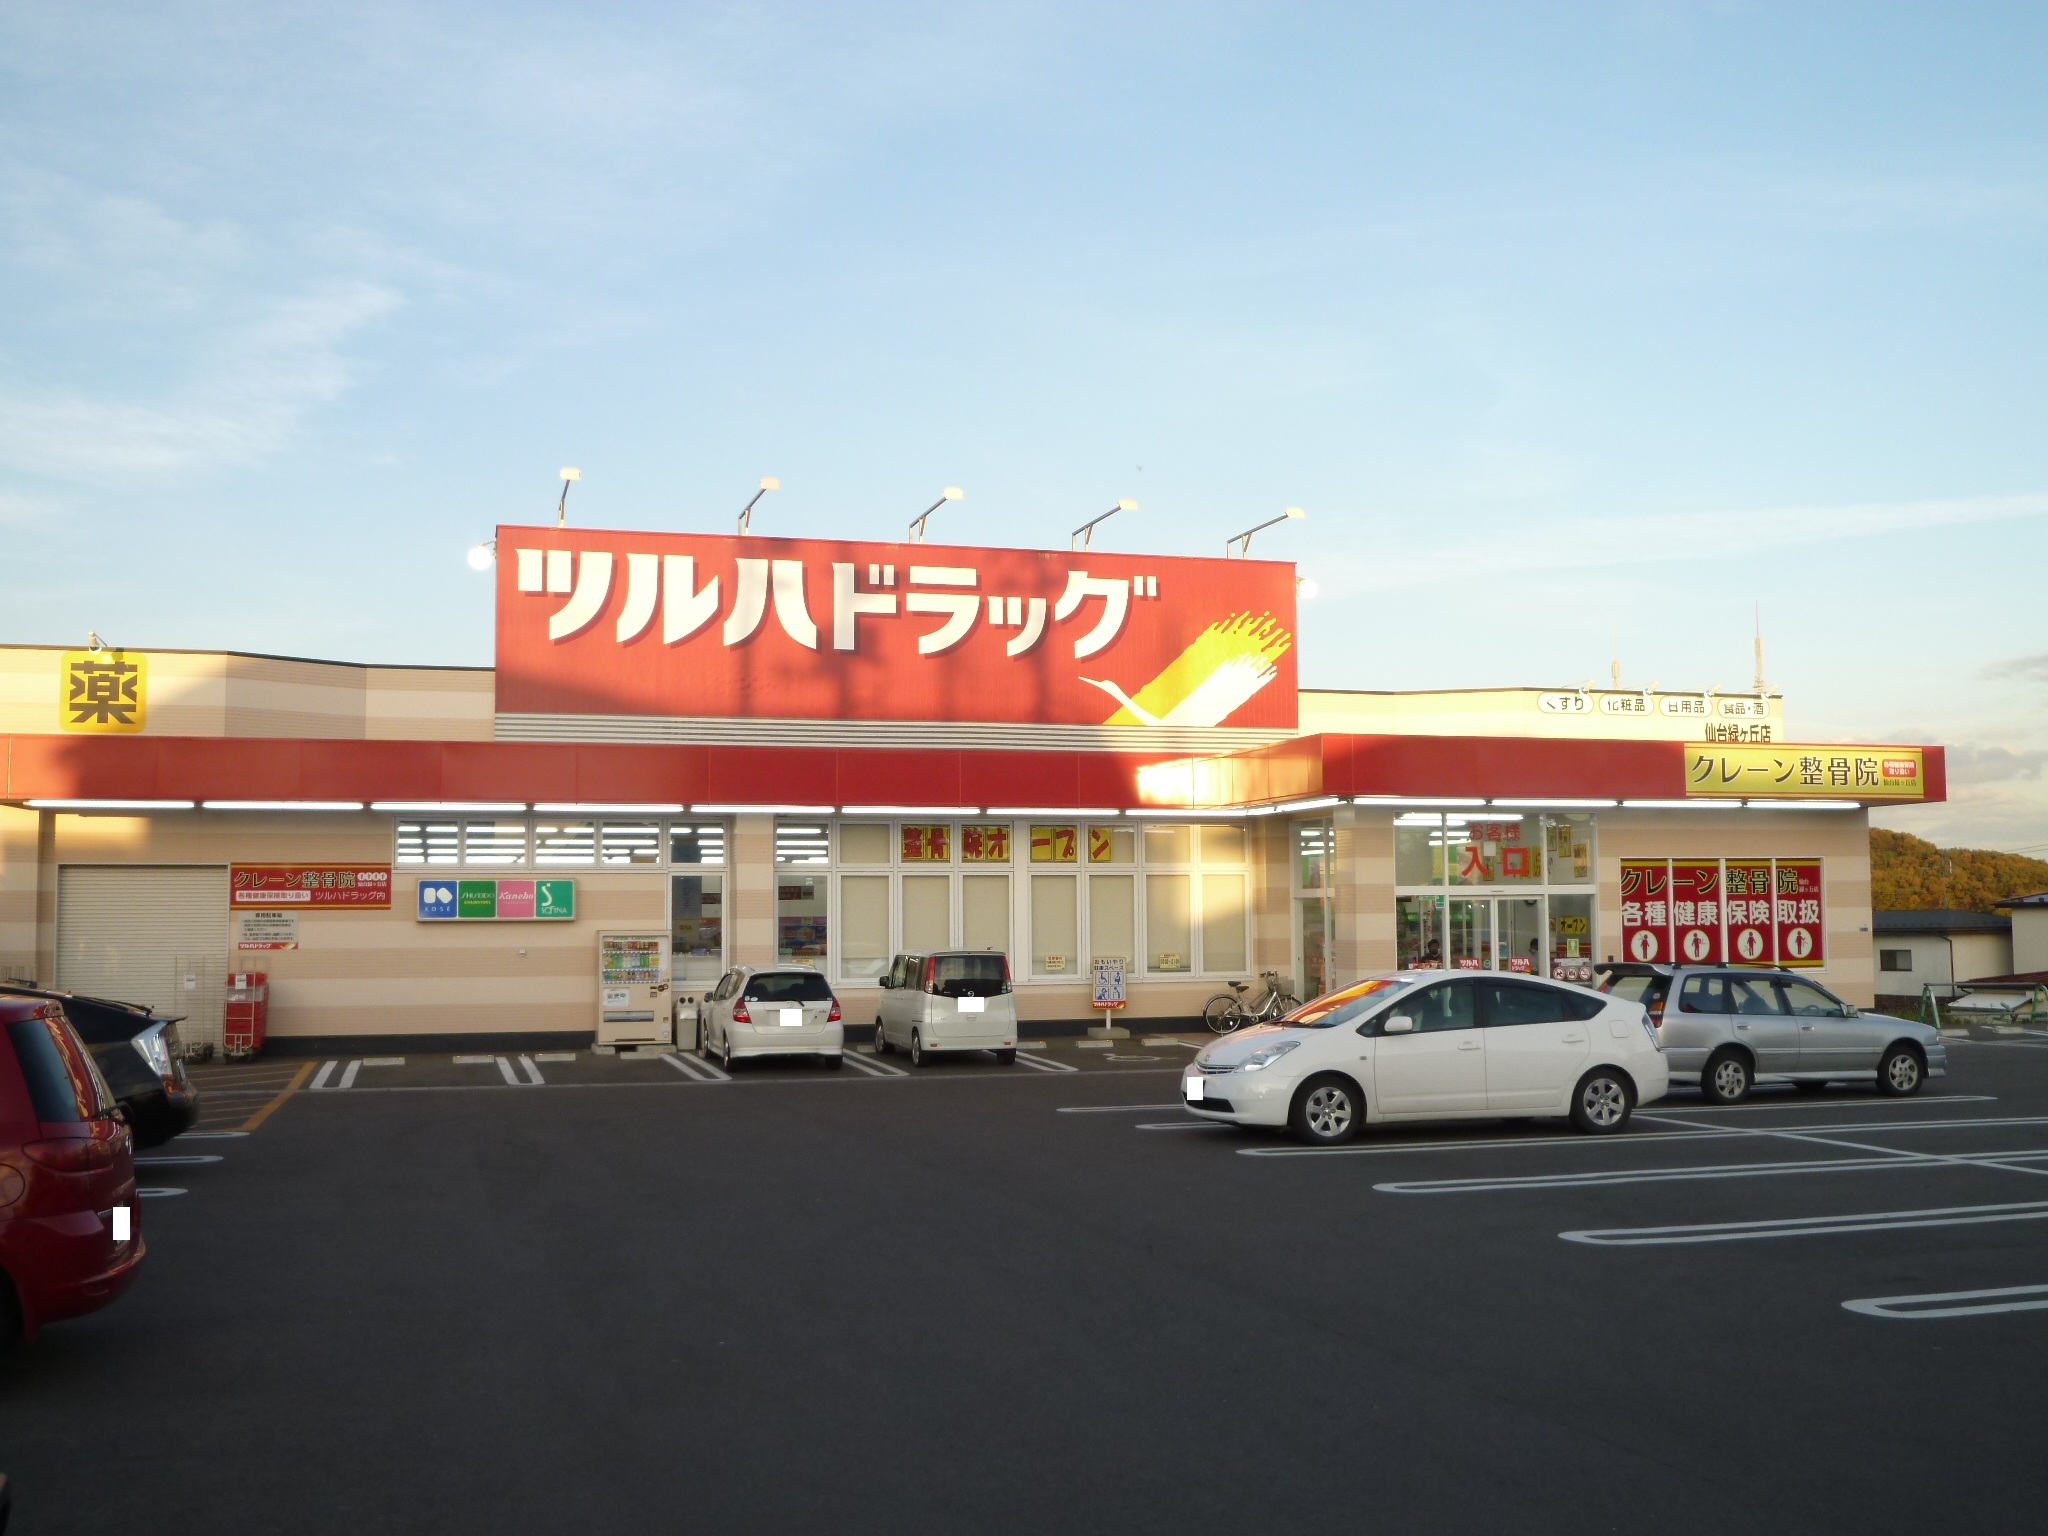 Dorakkusutoa. Tsuruha drag Sendai Midorigaoka shop 472m until (drugstore)